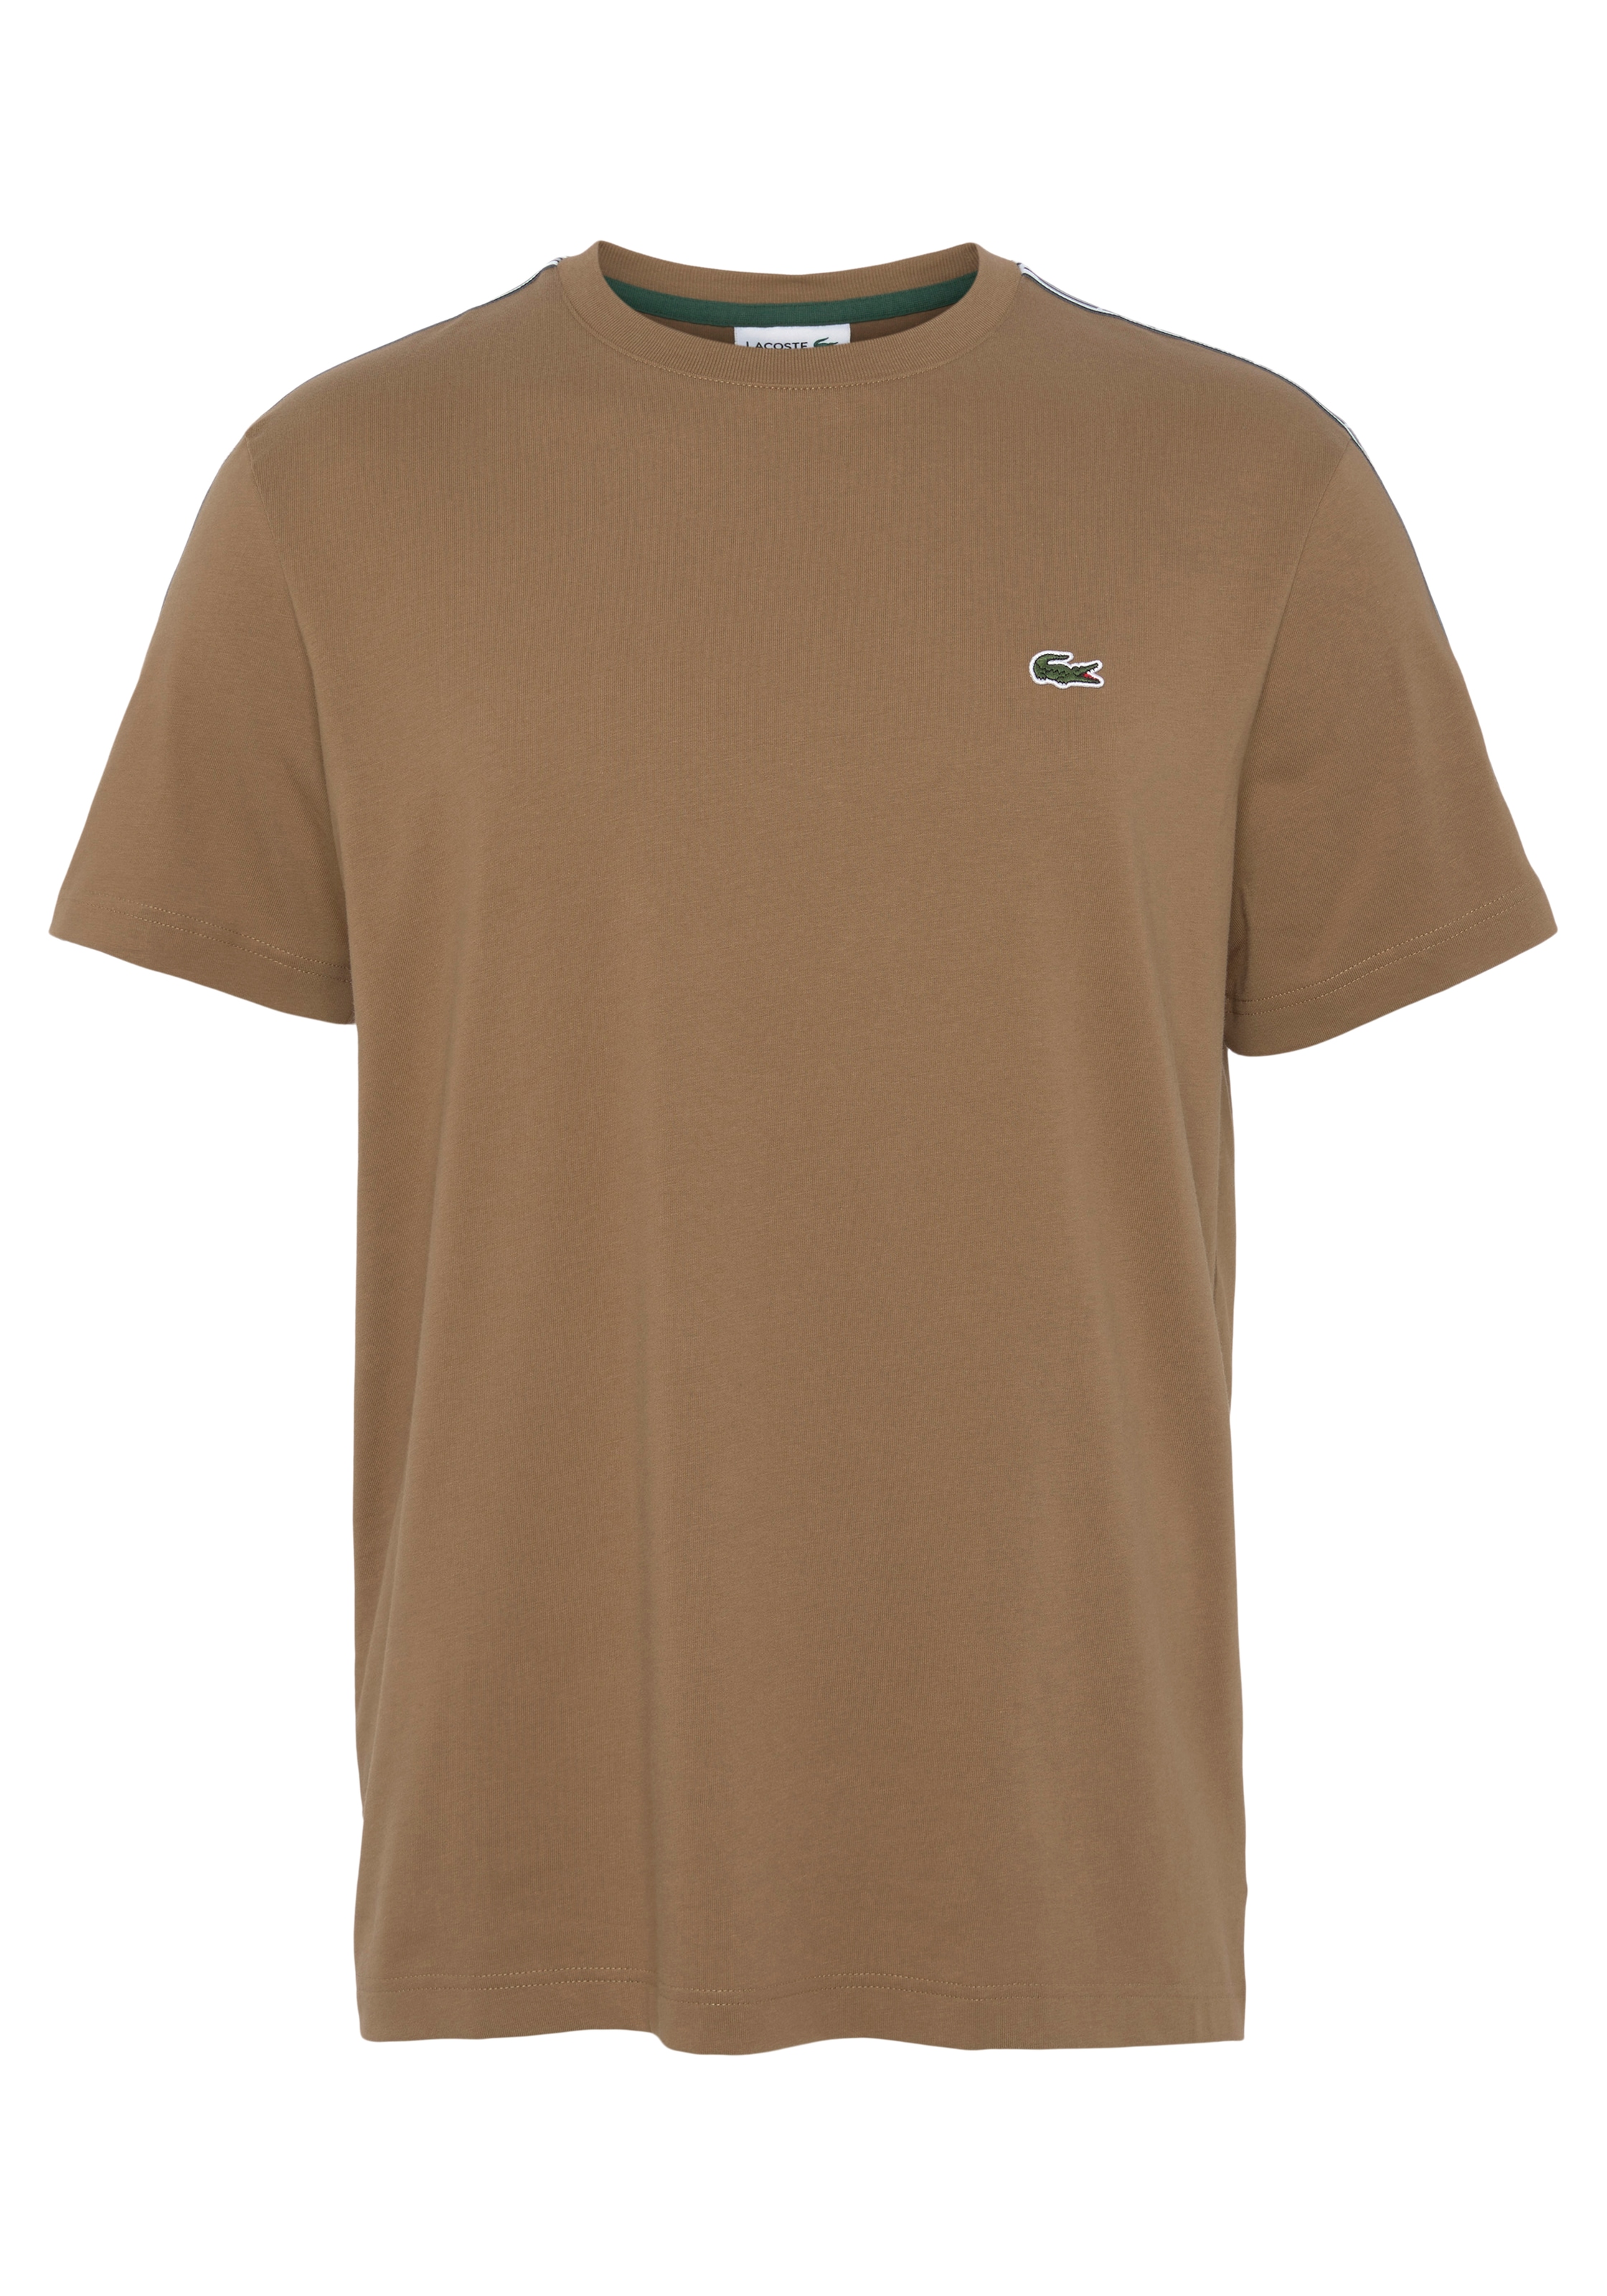 Lacoste T-Shirt, OTTO online beschriftetem bestellen bei an mit Kontrastband Schultern den